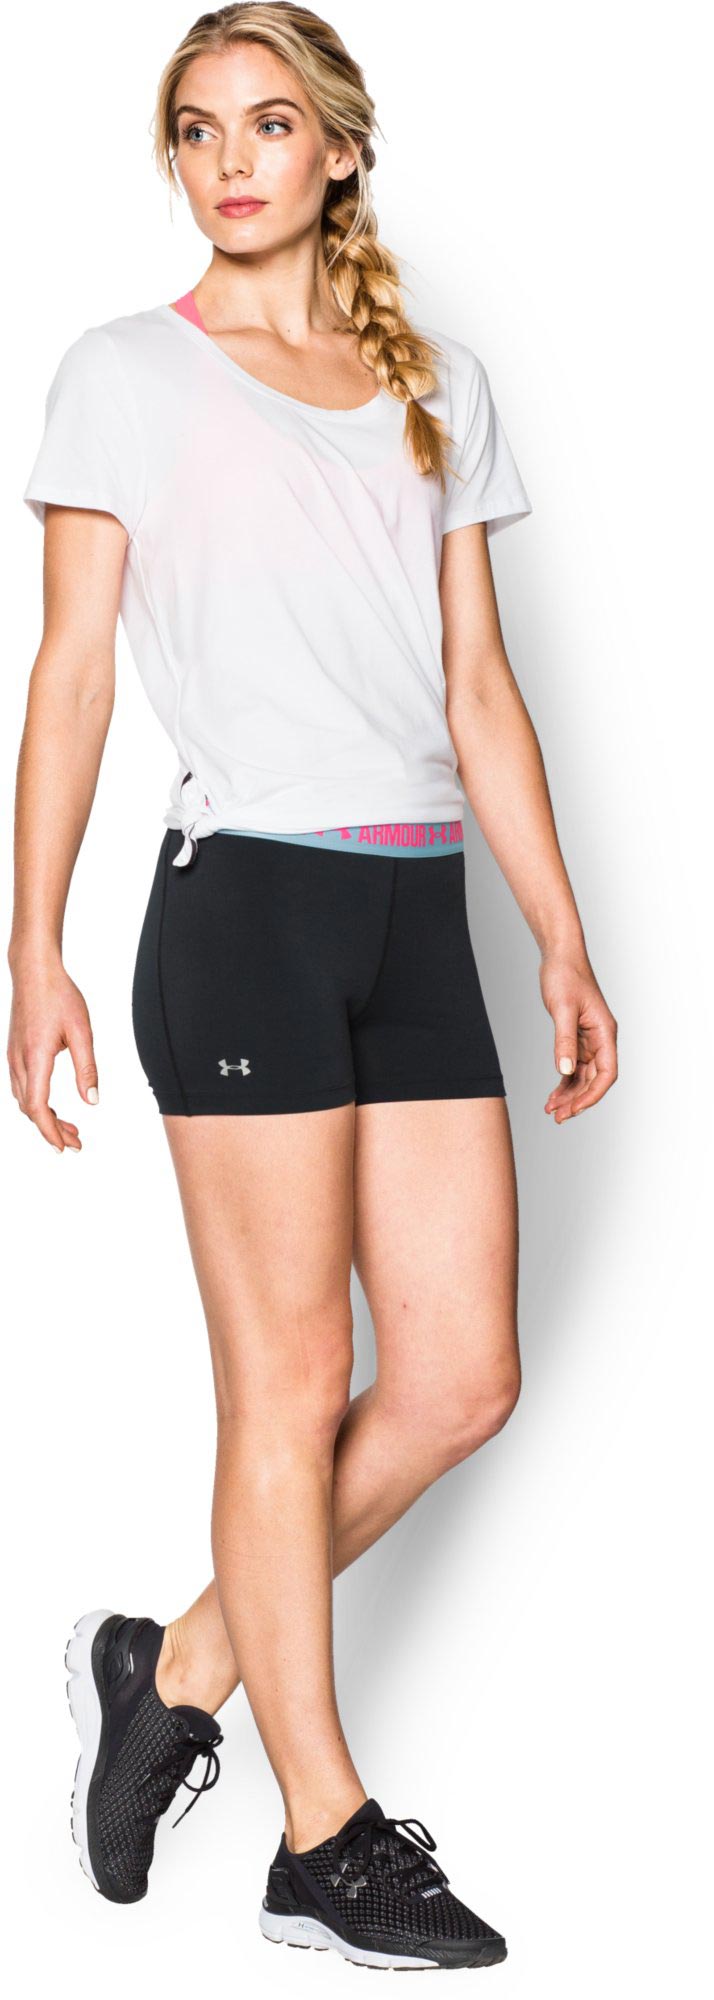 Women’s compression shorts